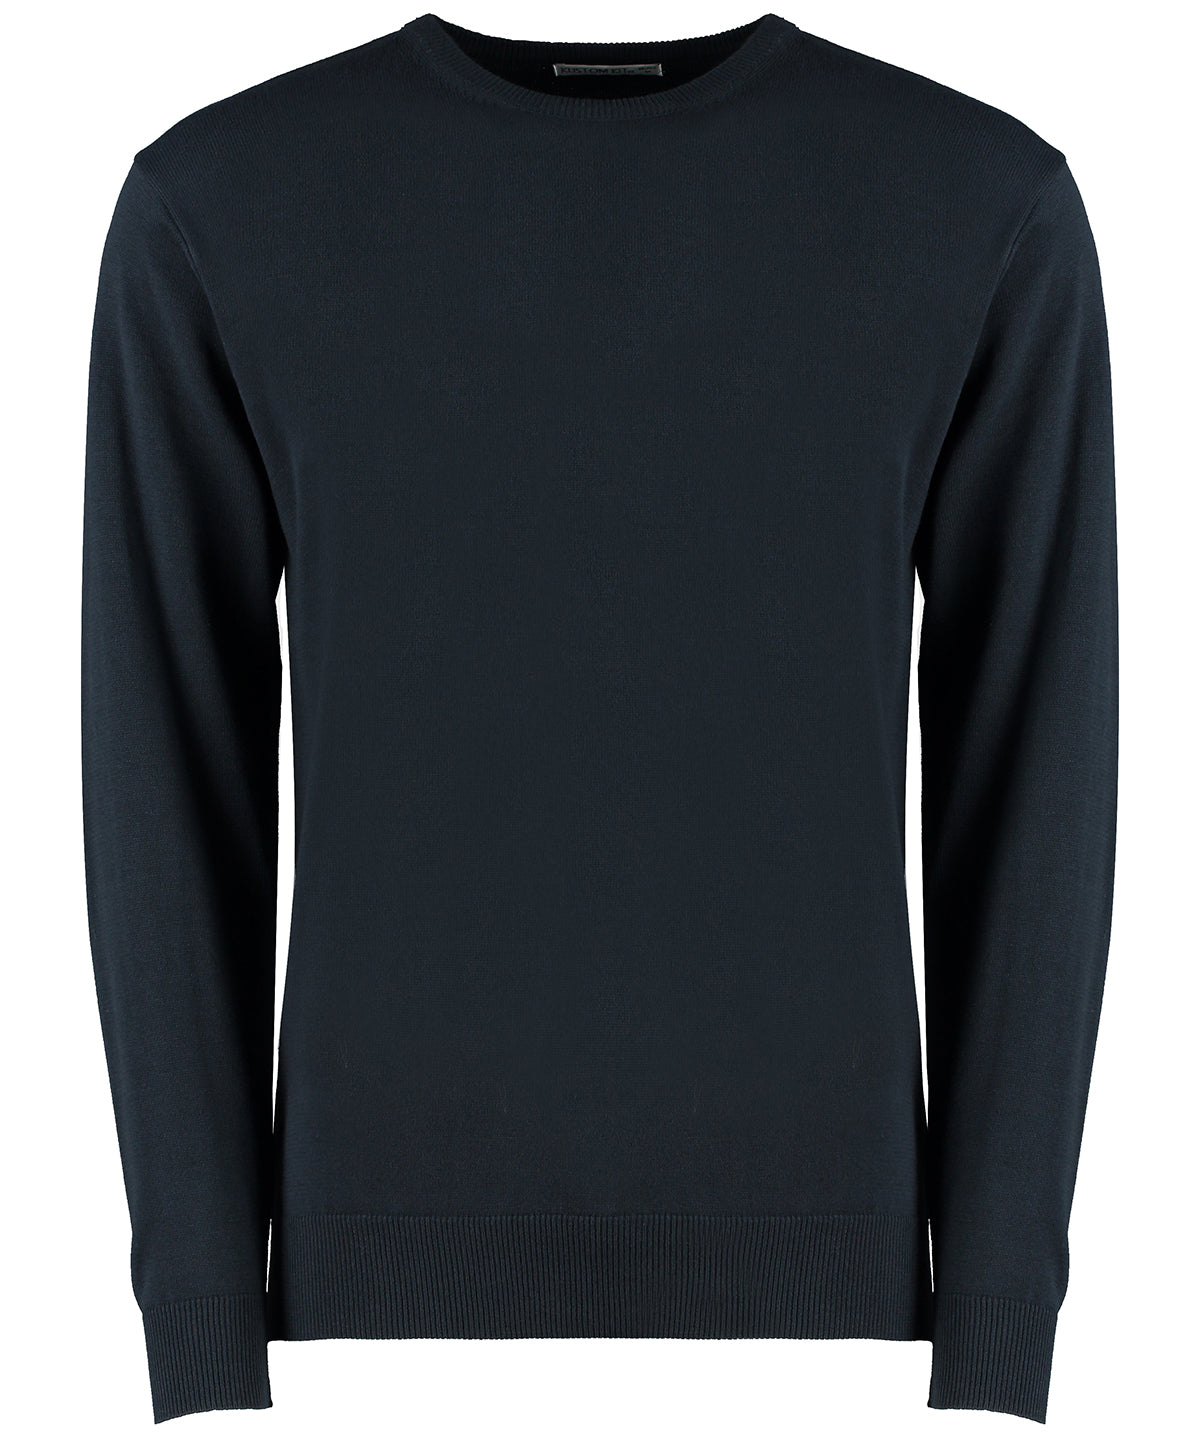 Personalised Knitted Jumpers - Black Kustom Kit Regular fit Arundel crew neck sweater